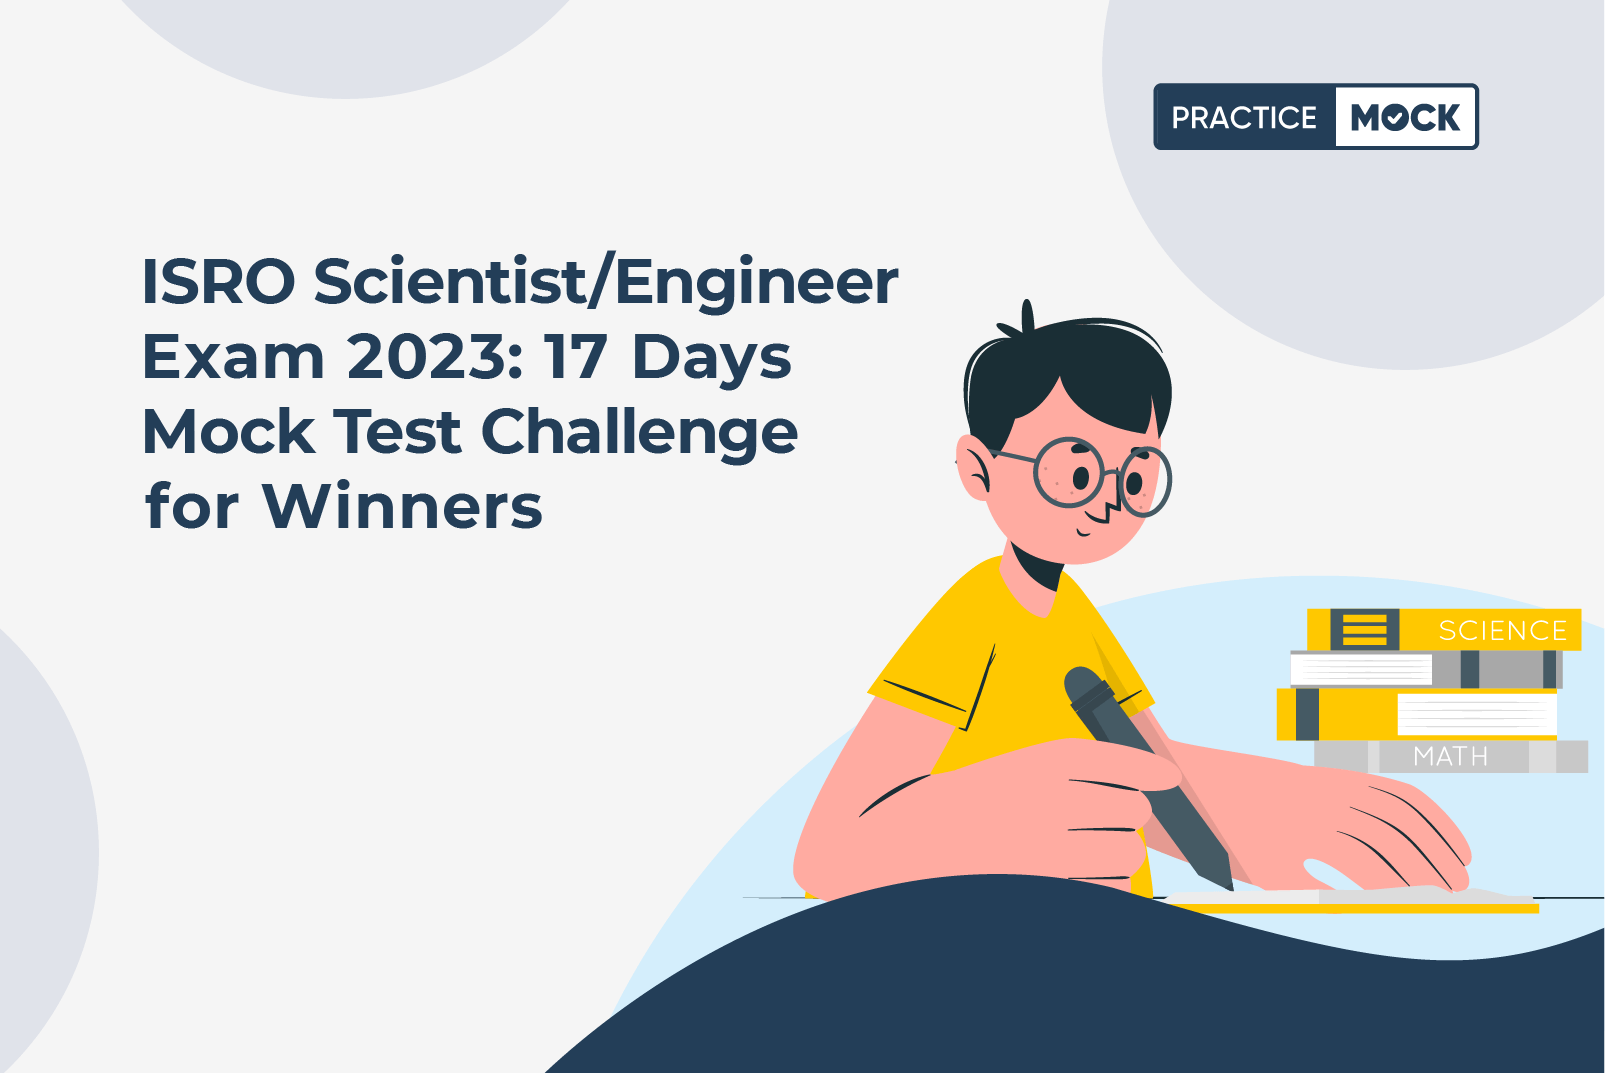 ISRO Scientist/Engineer Exam 2023: 17 Days Mock Test Challenge for Winners